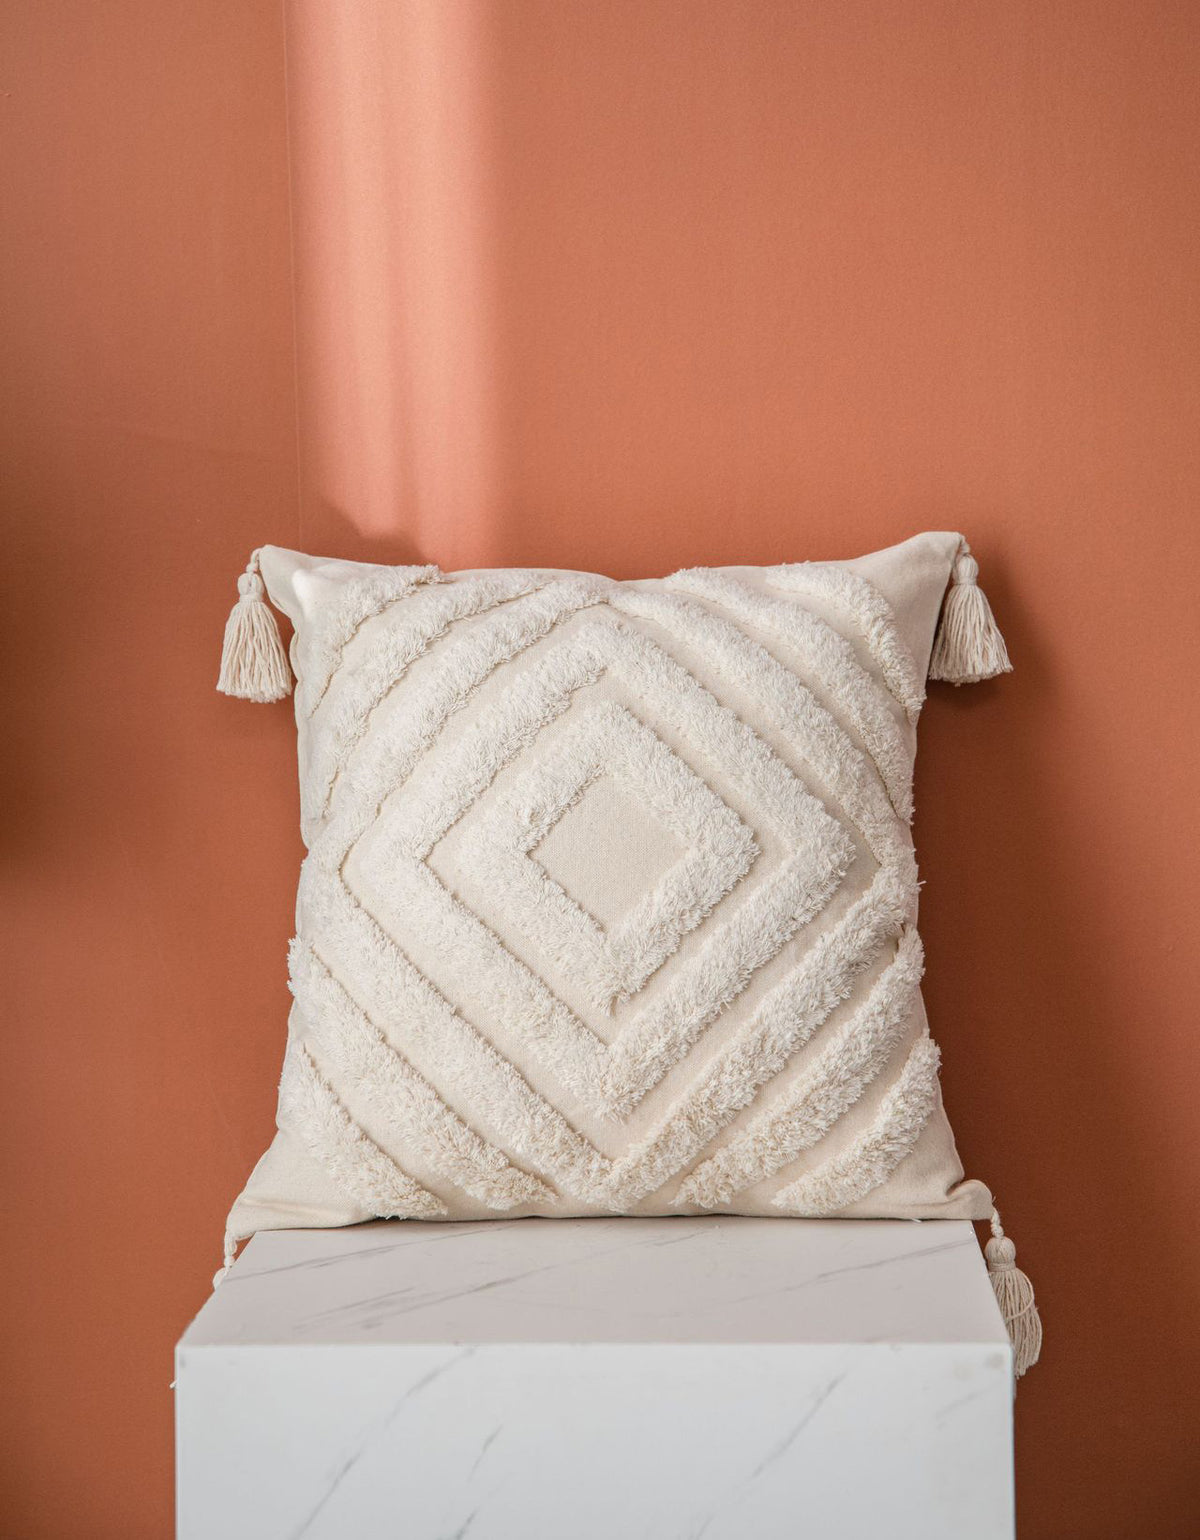 Moroccan Style Sofa Cushion Covers